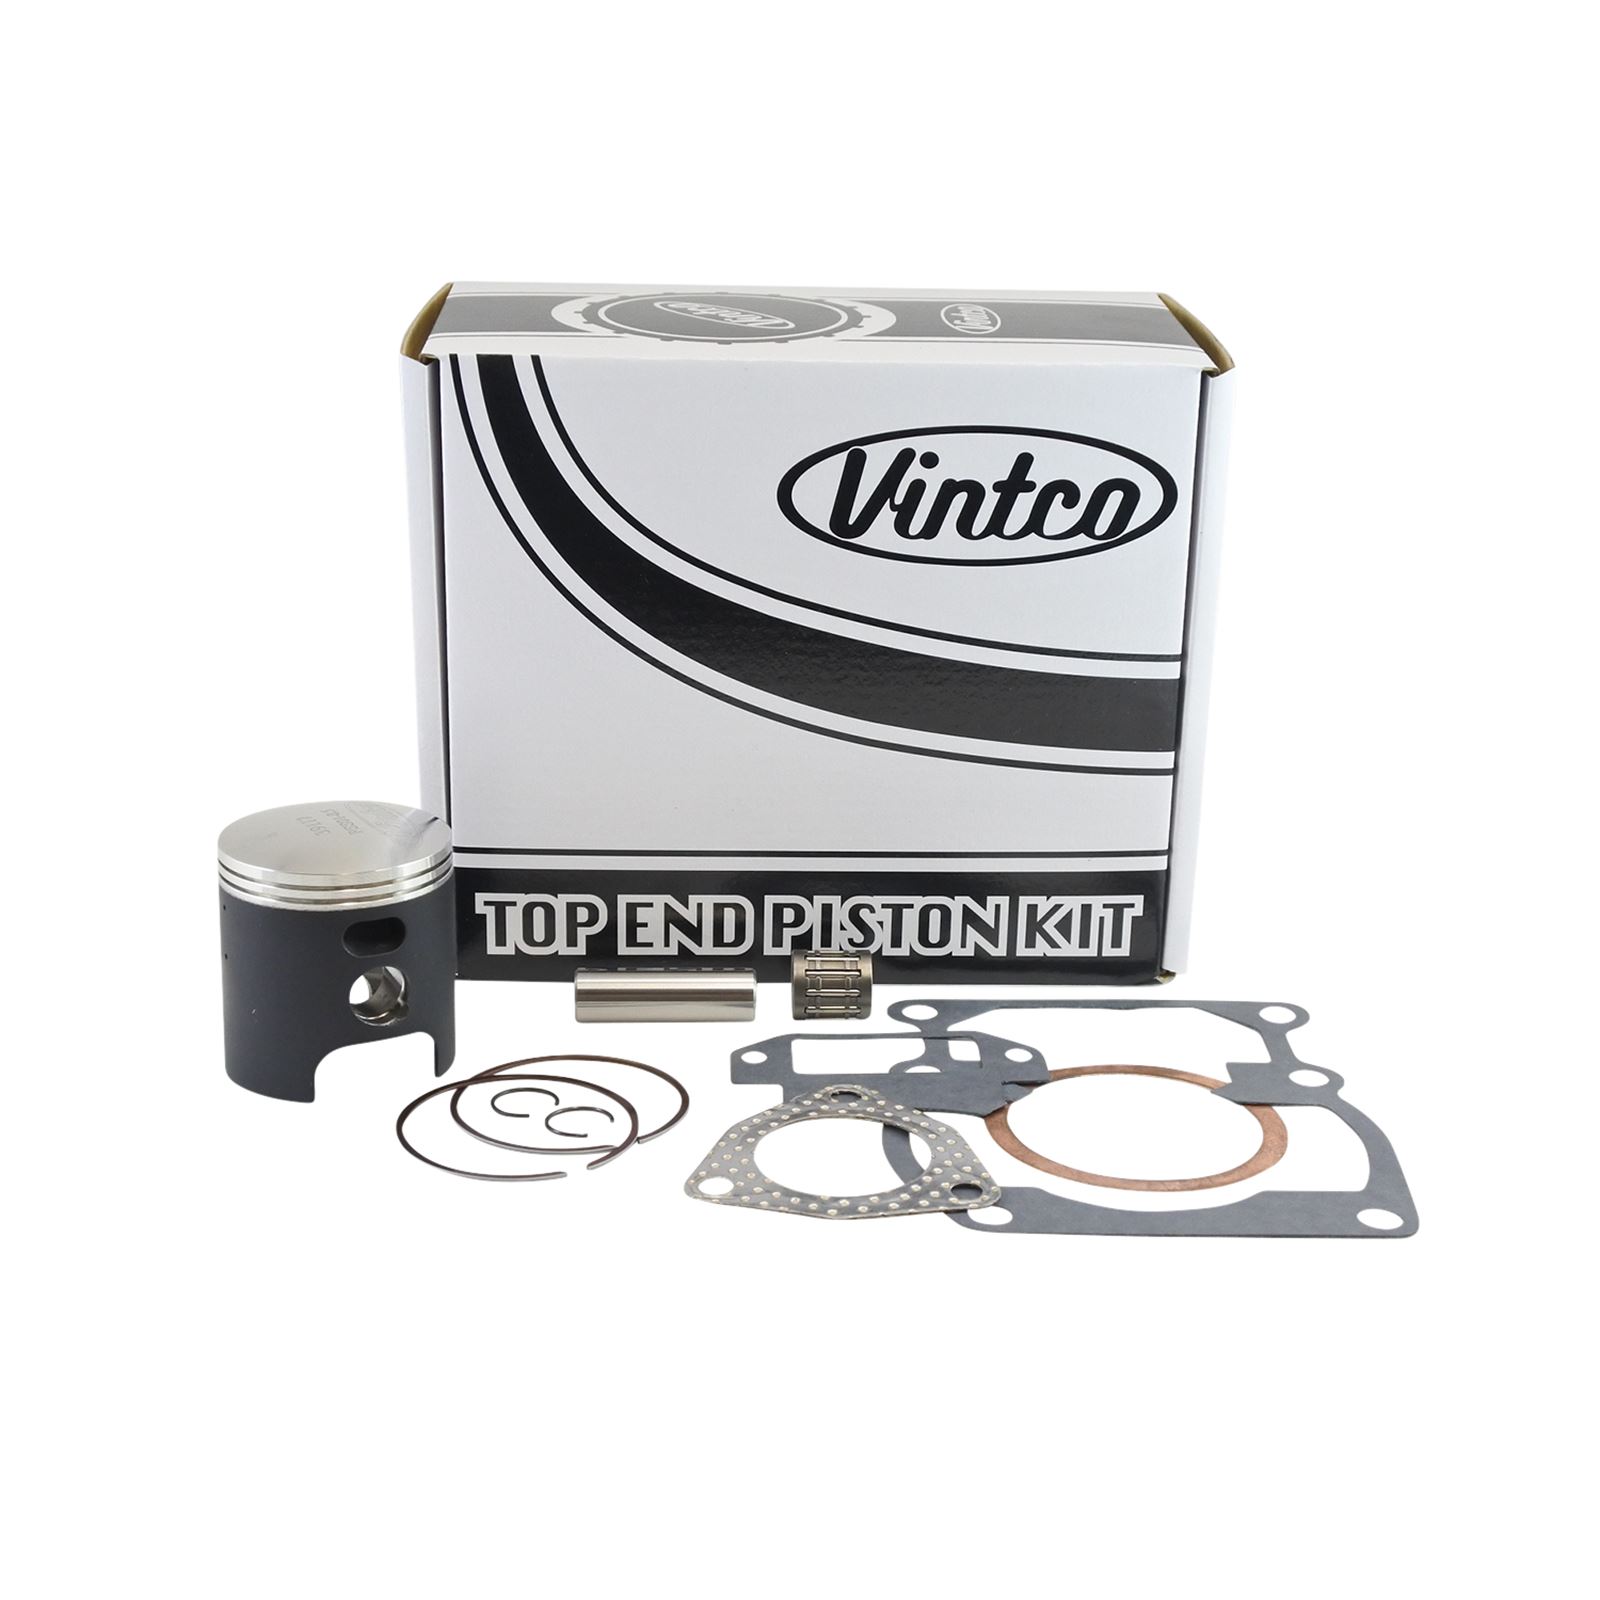 Vintco Top End Piston Kit - KTS01-0.5